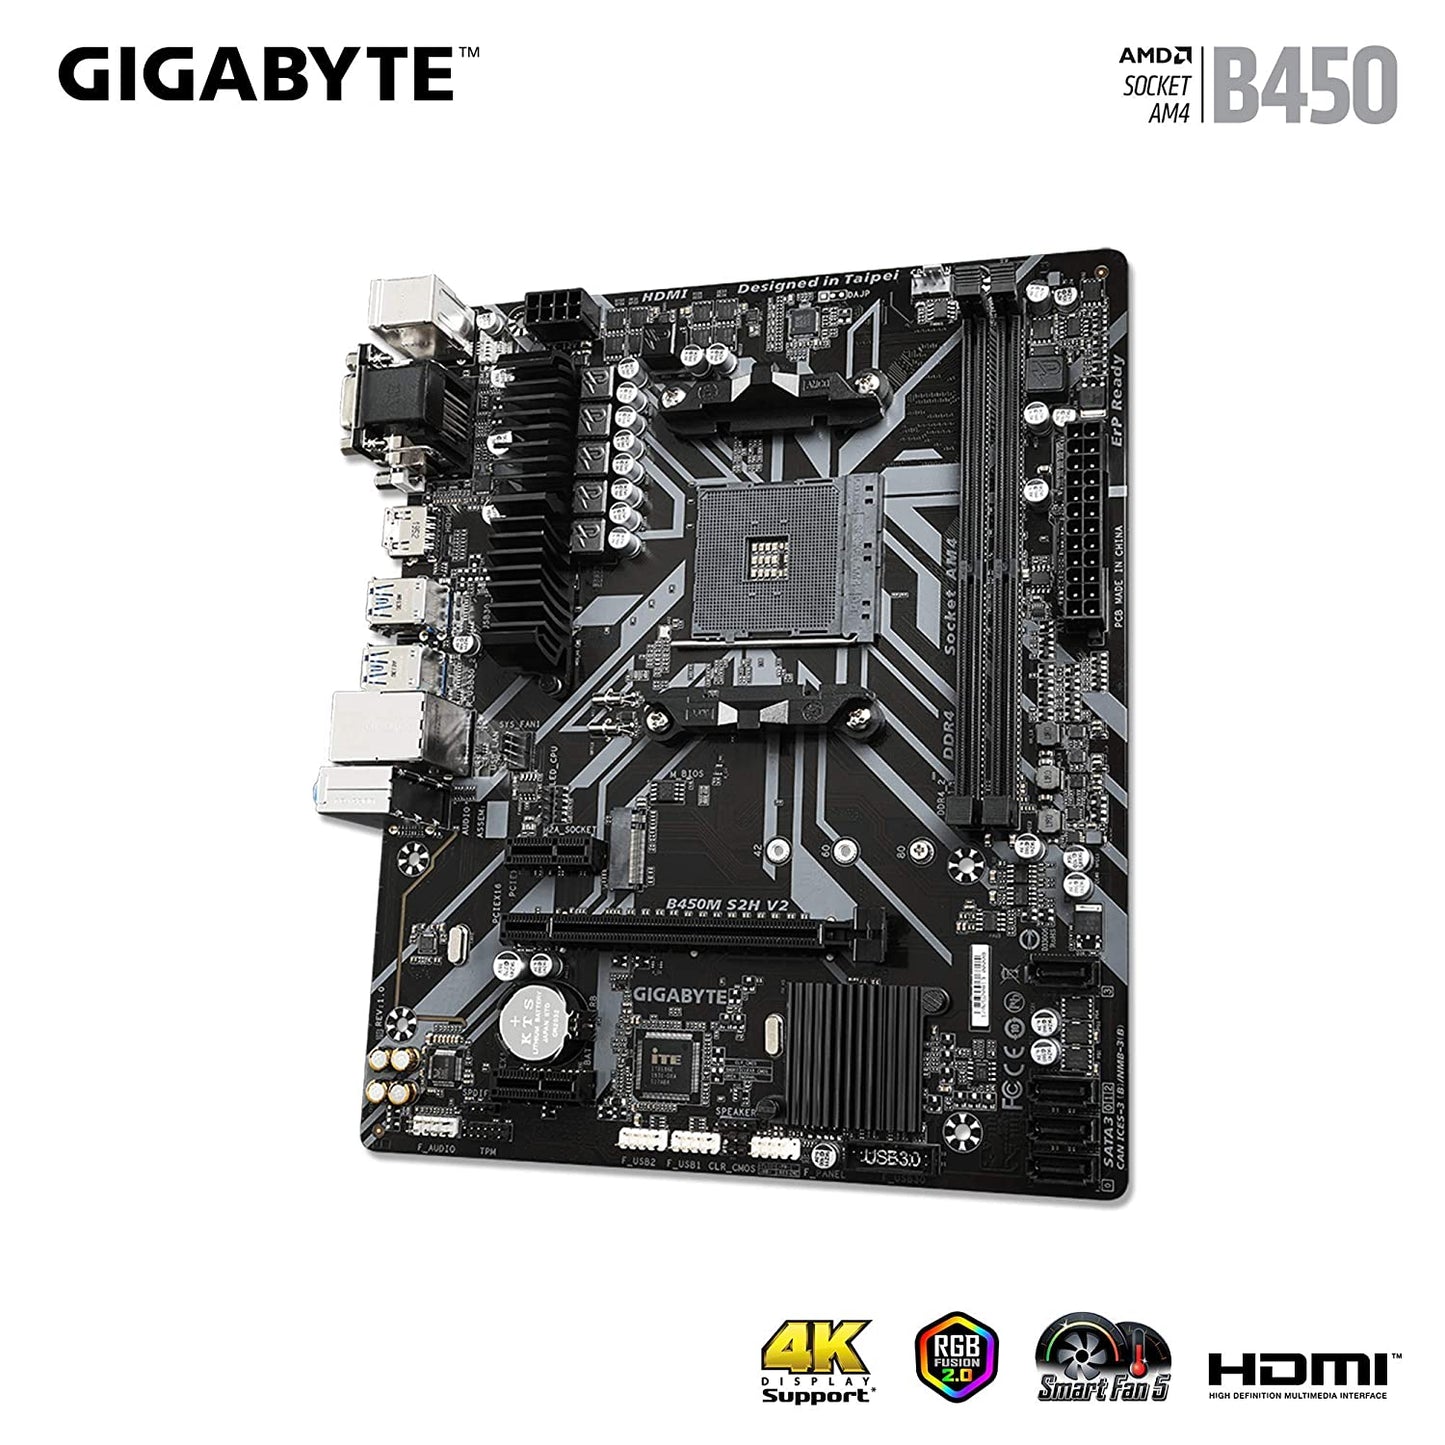 GIGABYTE AMD B450M S2H V2 Ultra Durable Motherboard with Digital VRM Solution, GIGABYTE Gaming LAN and Bandwidth Management, PCIe Gen3 x4 M.2, RGB LED Strip Header